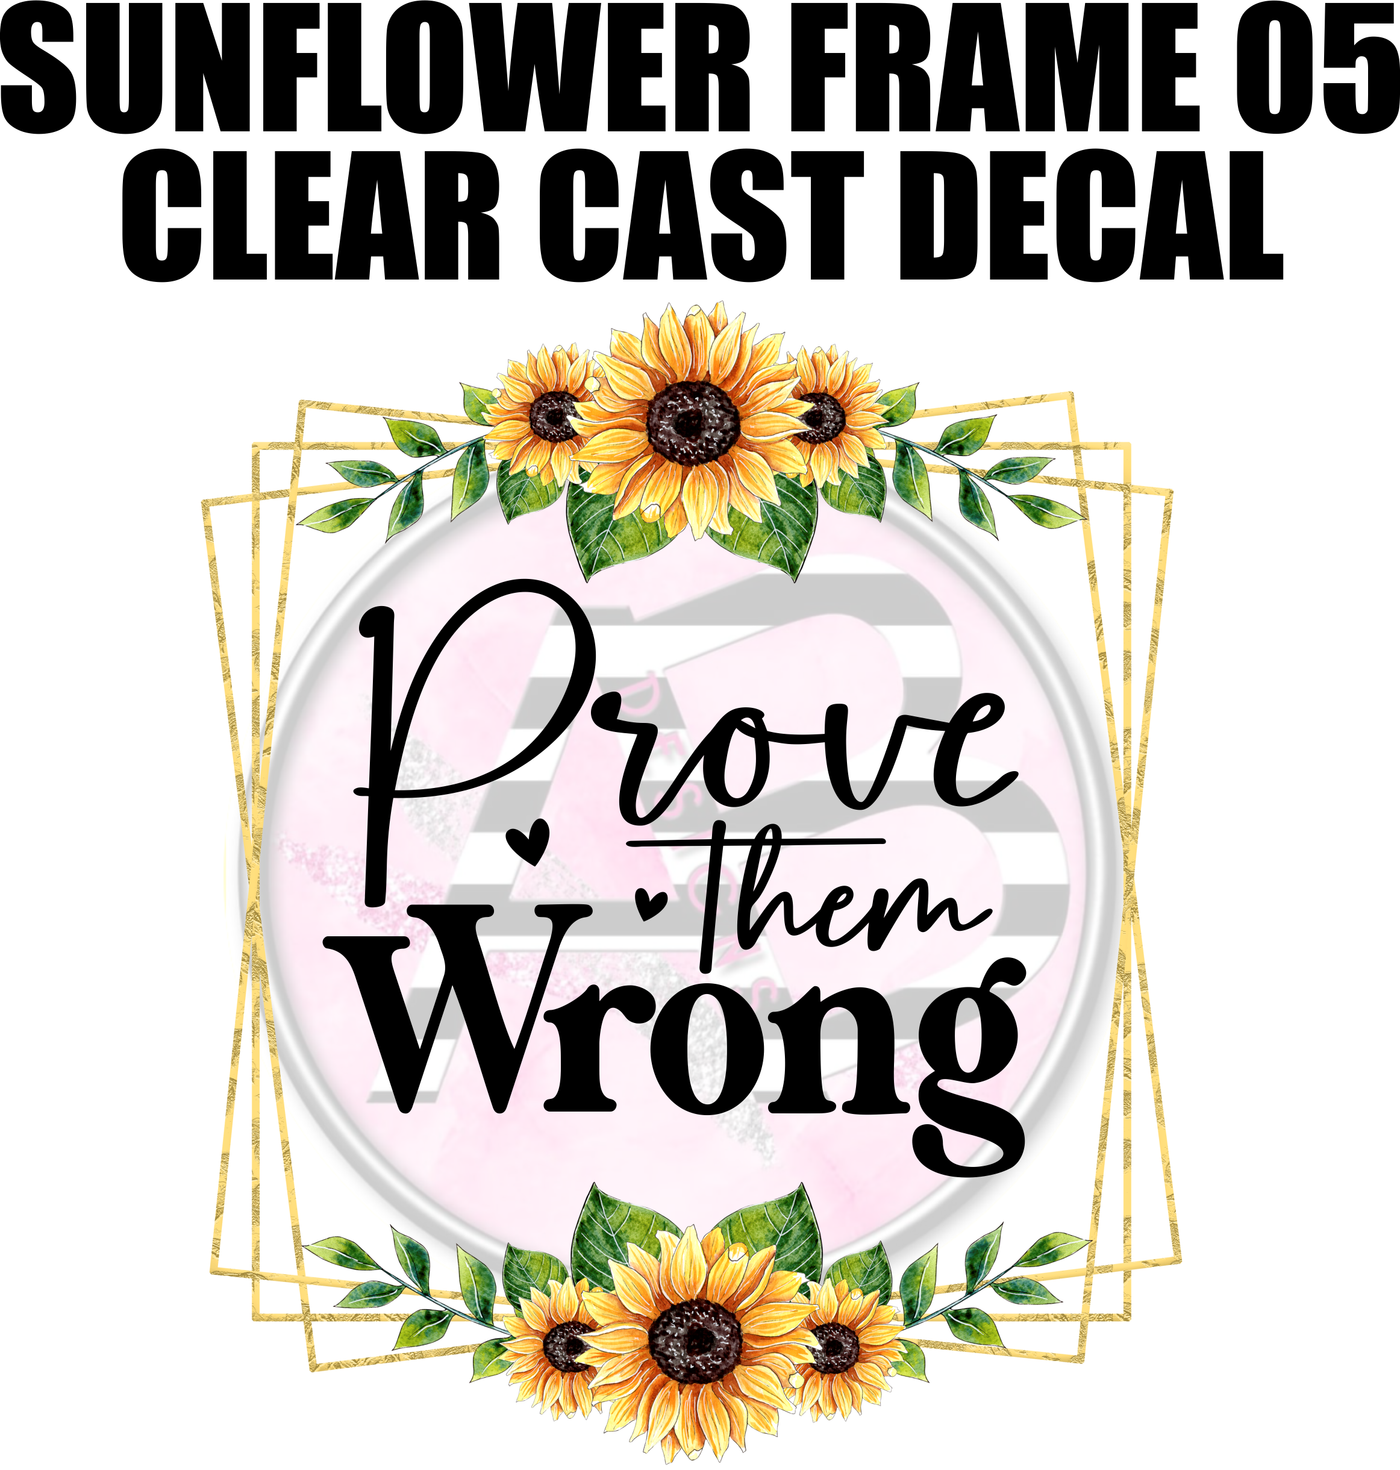 Sunflower Frame 05 - Clear Cast Decal